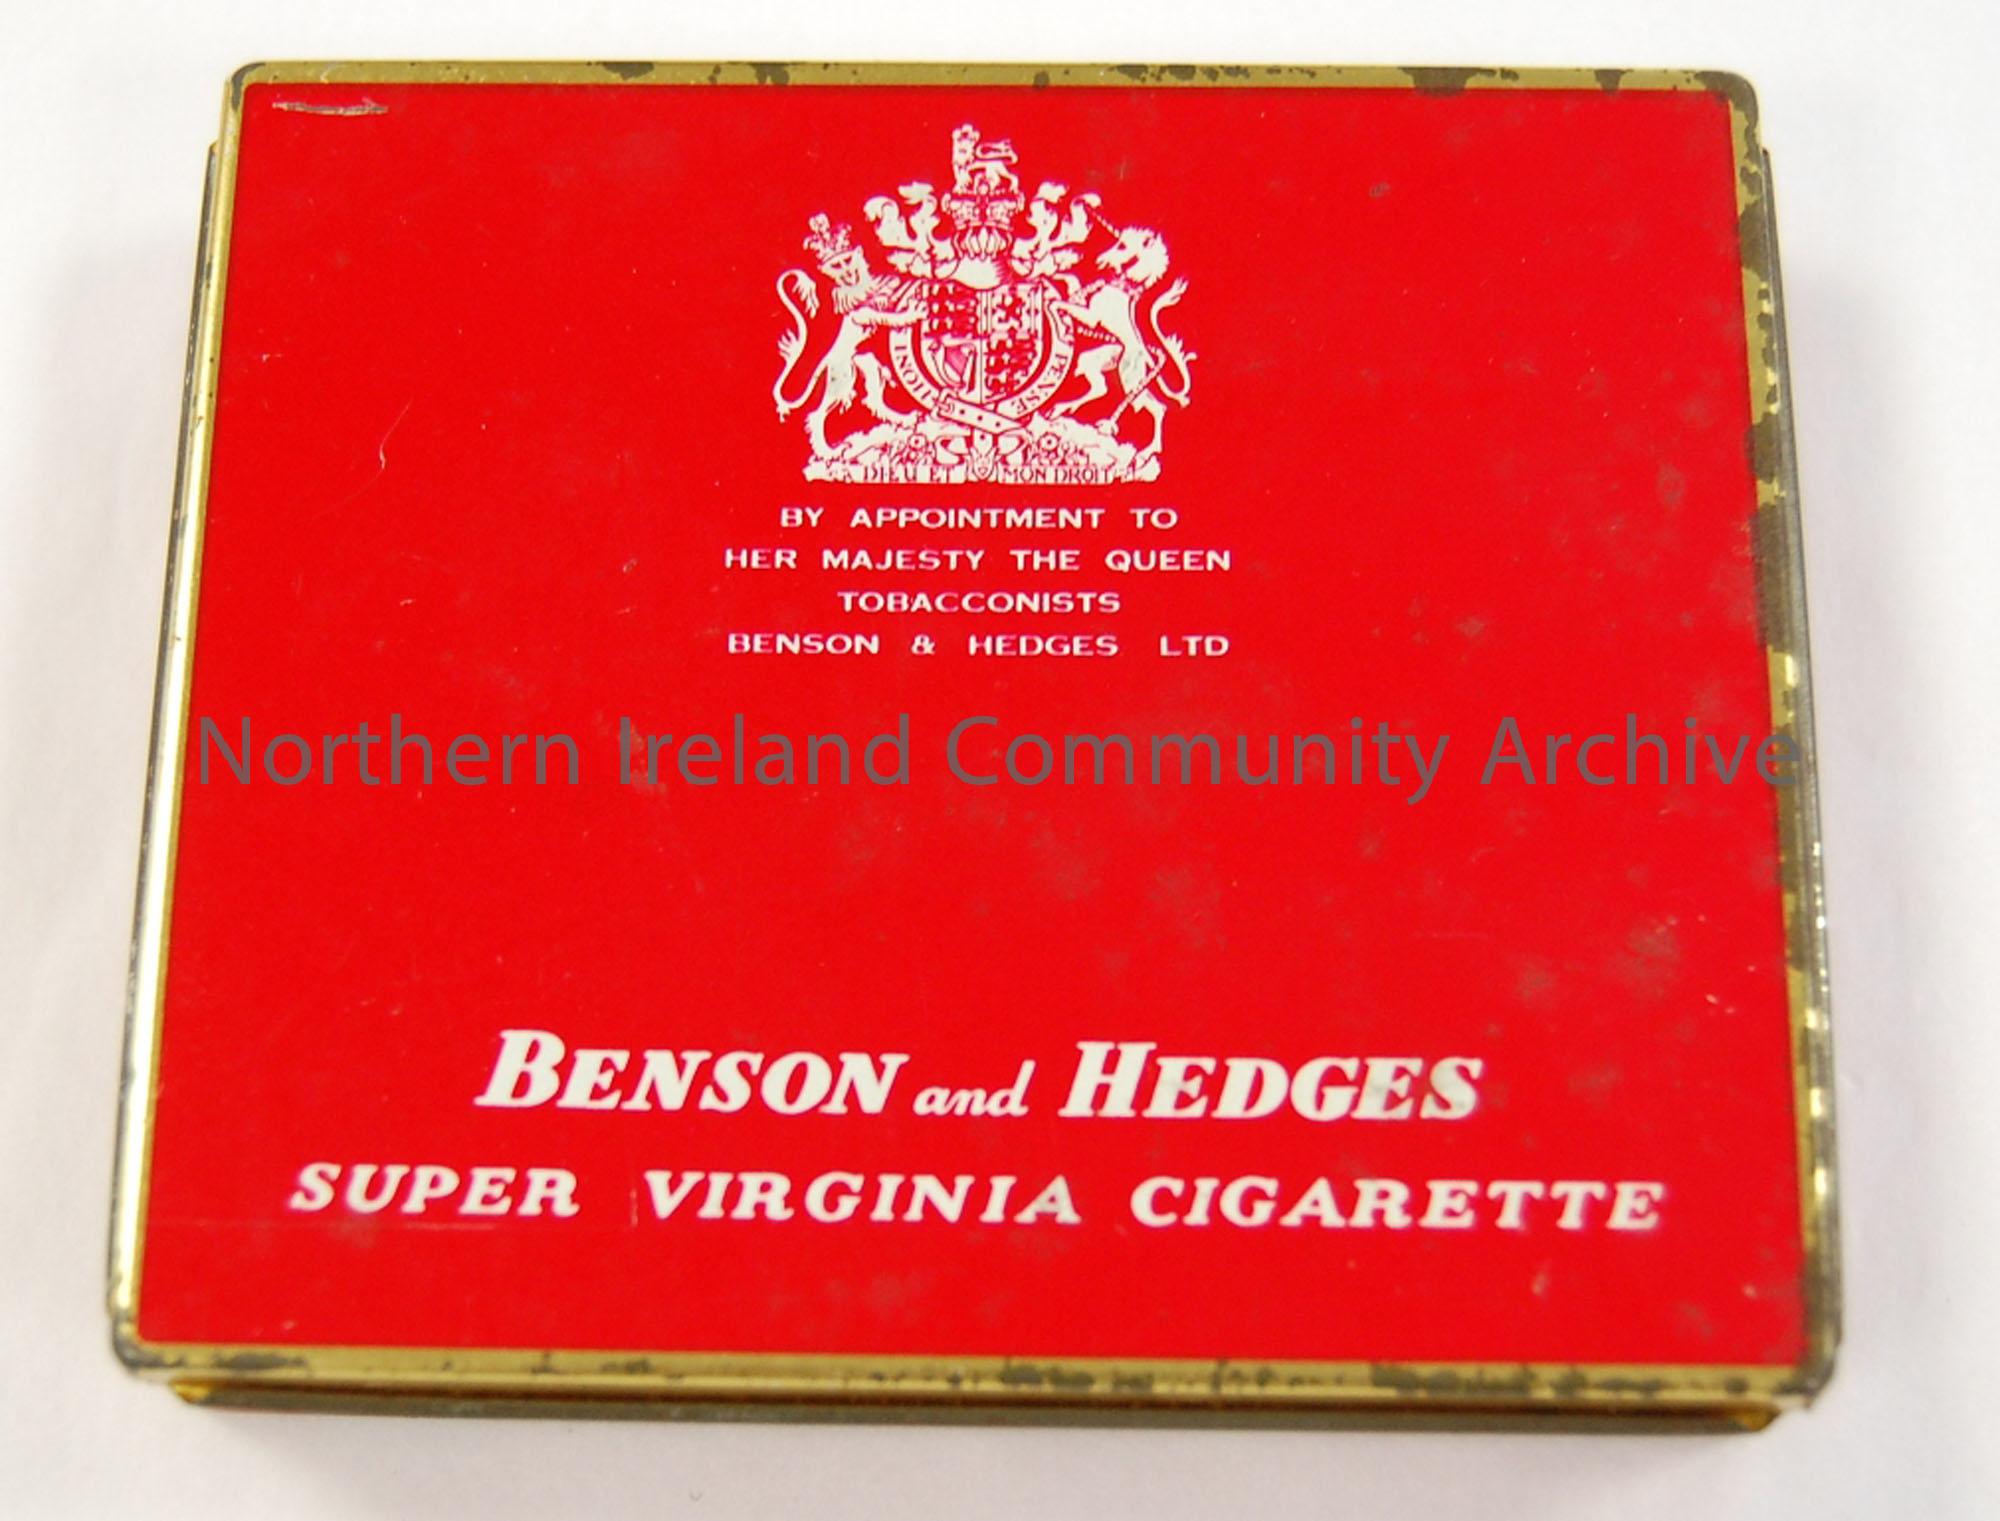 Benson and Hedges super Virginia cigarette box.